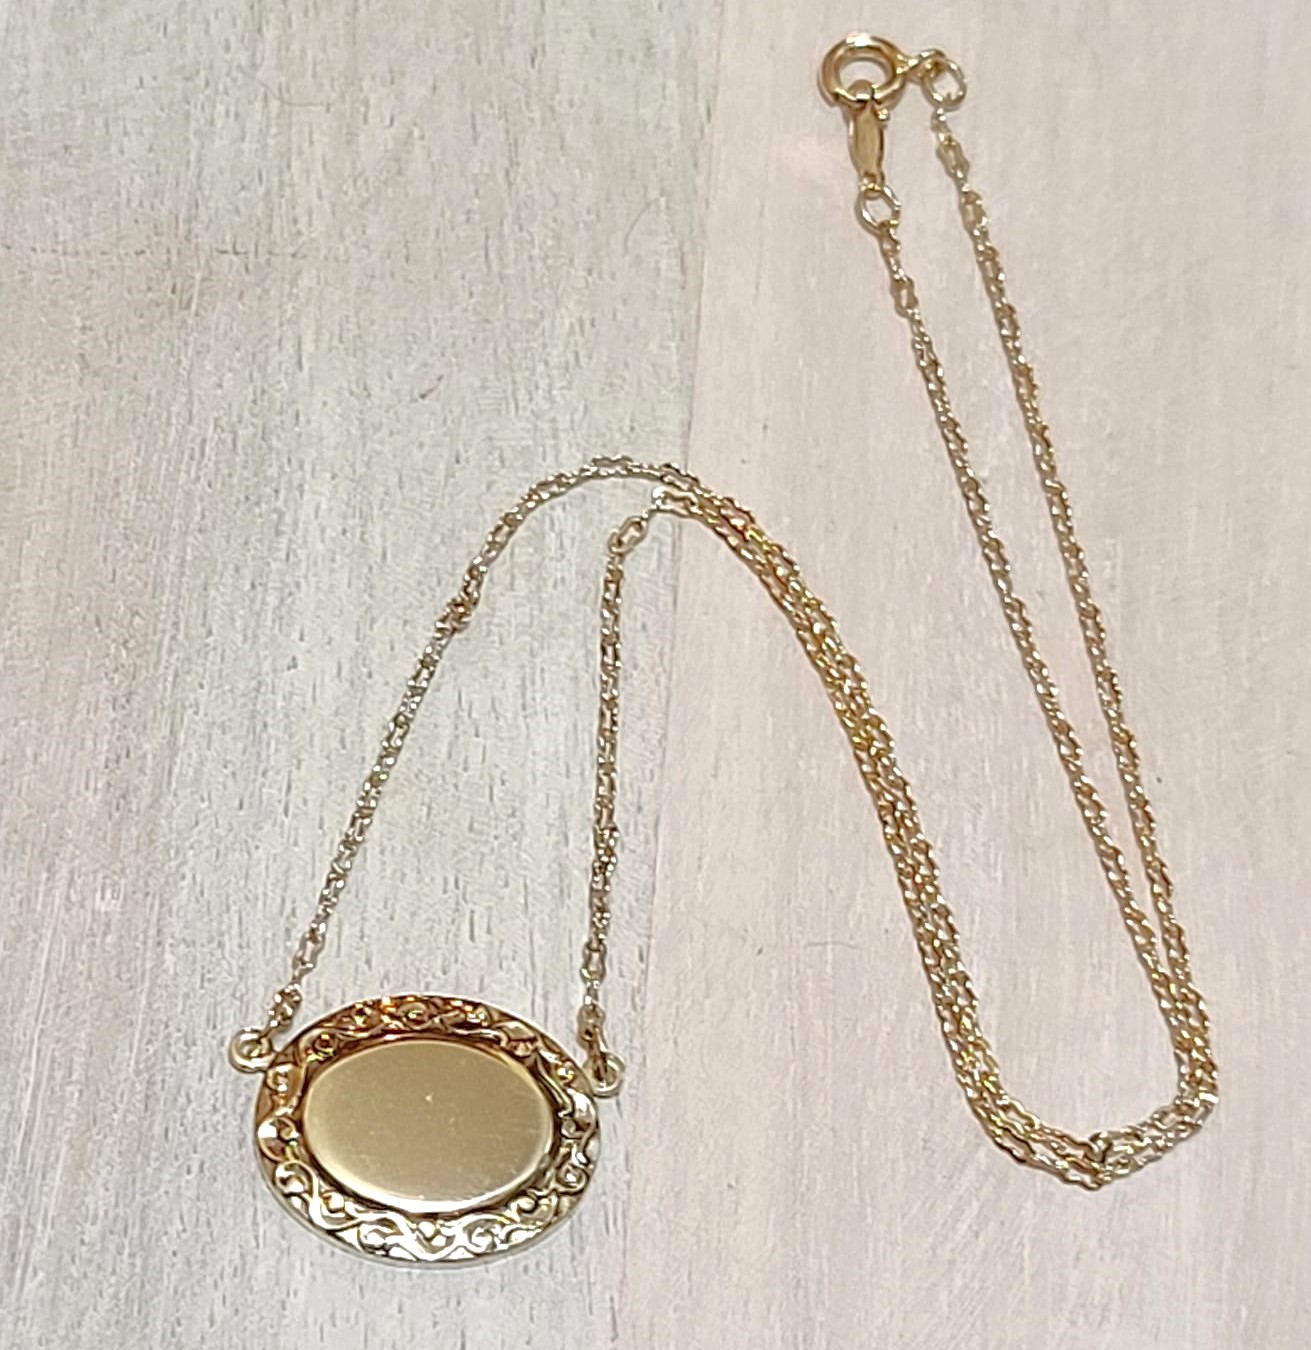 The Roman Company, RMN, oval shaped pendant and chain goldtone